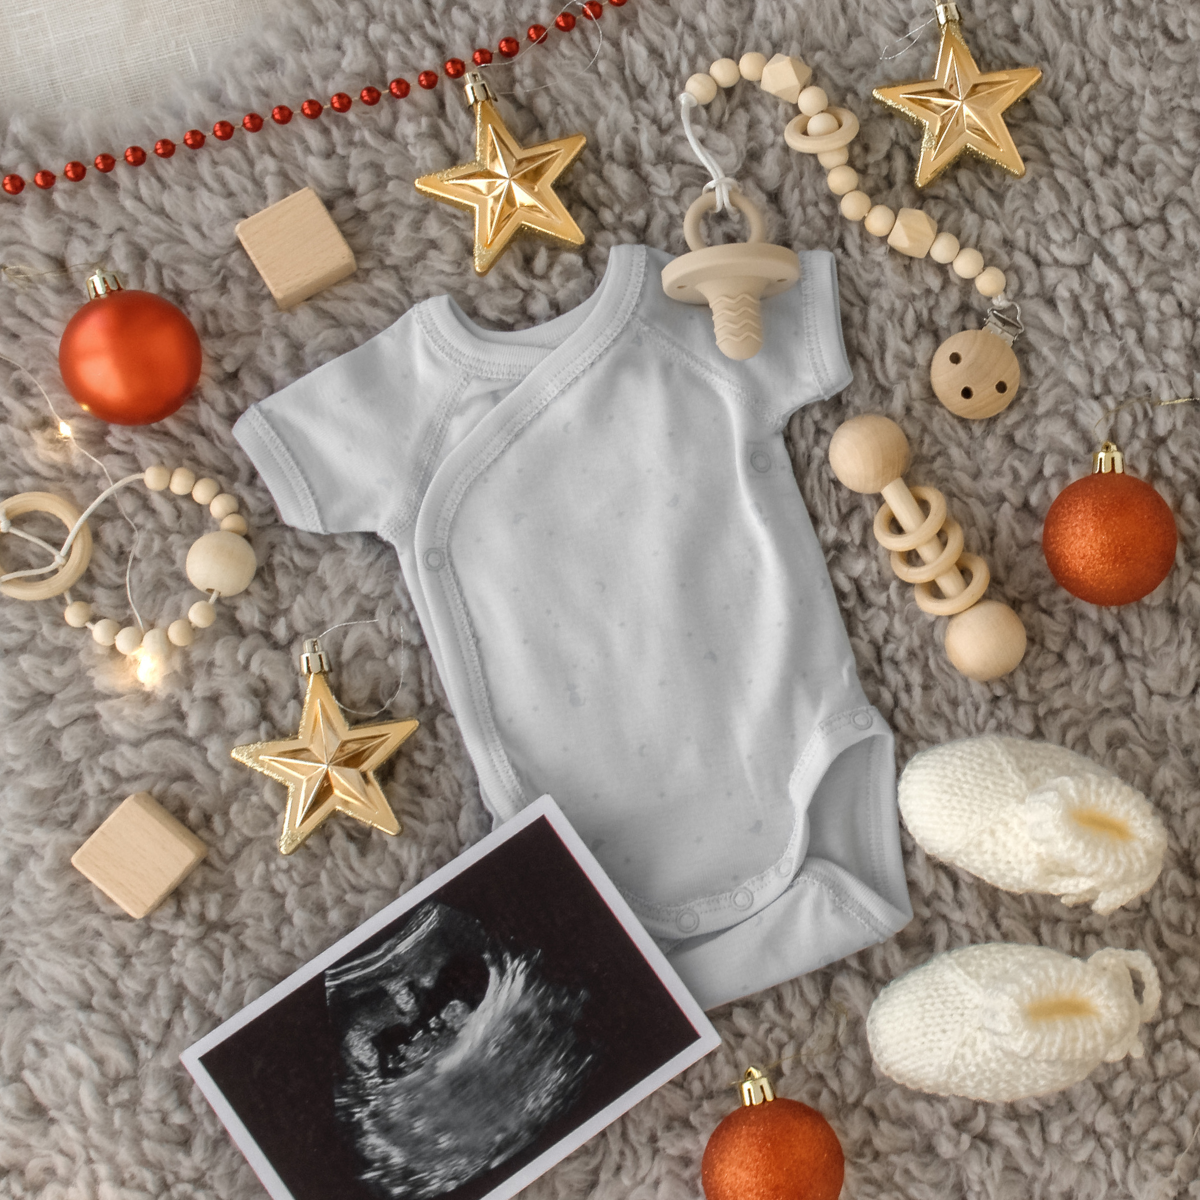 Baby onesie and ultrasound